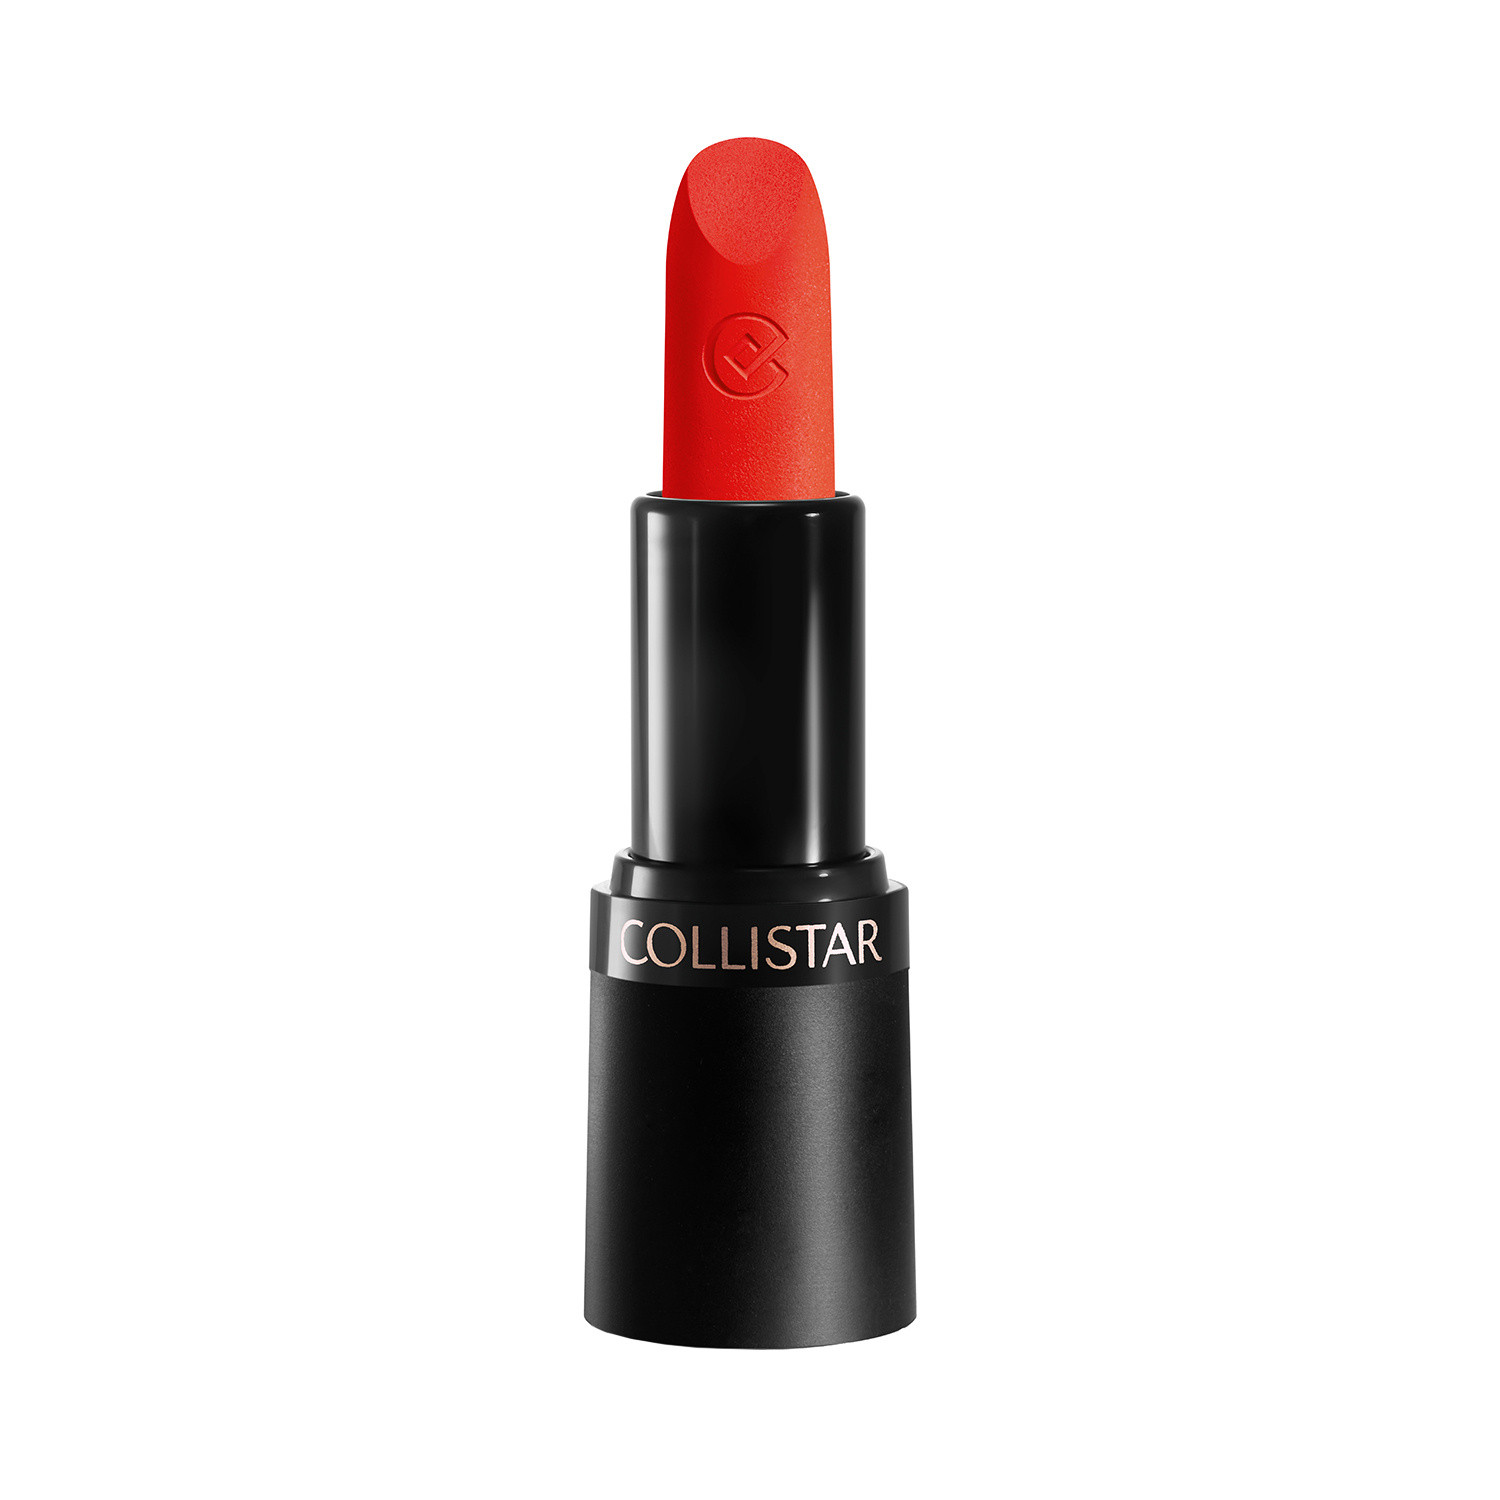 Collistar - Pure matte lipstick - 40 Mandarin, Orange, large image number 0